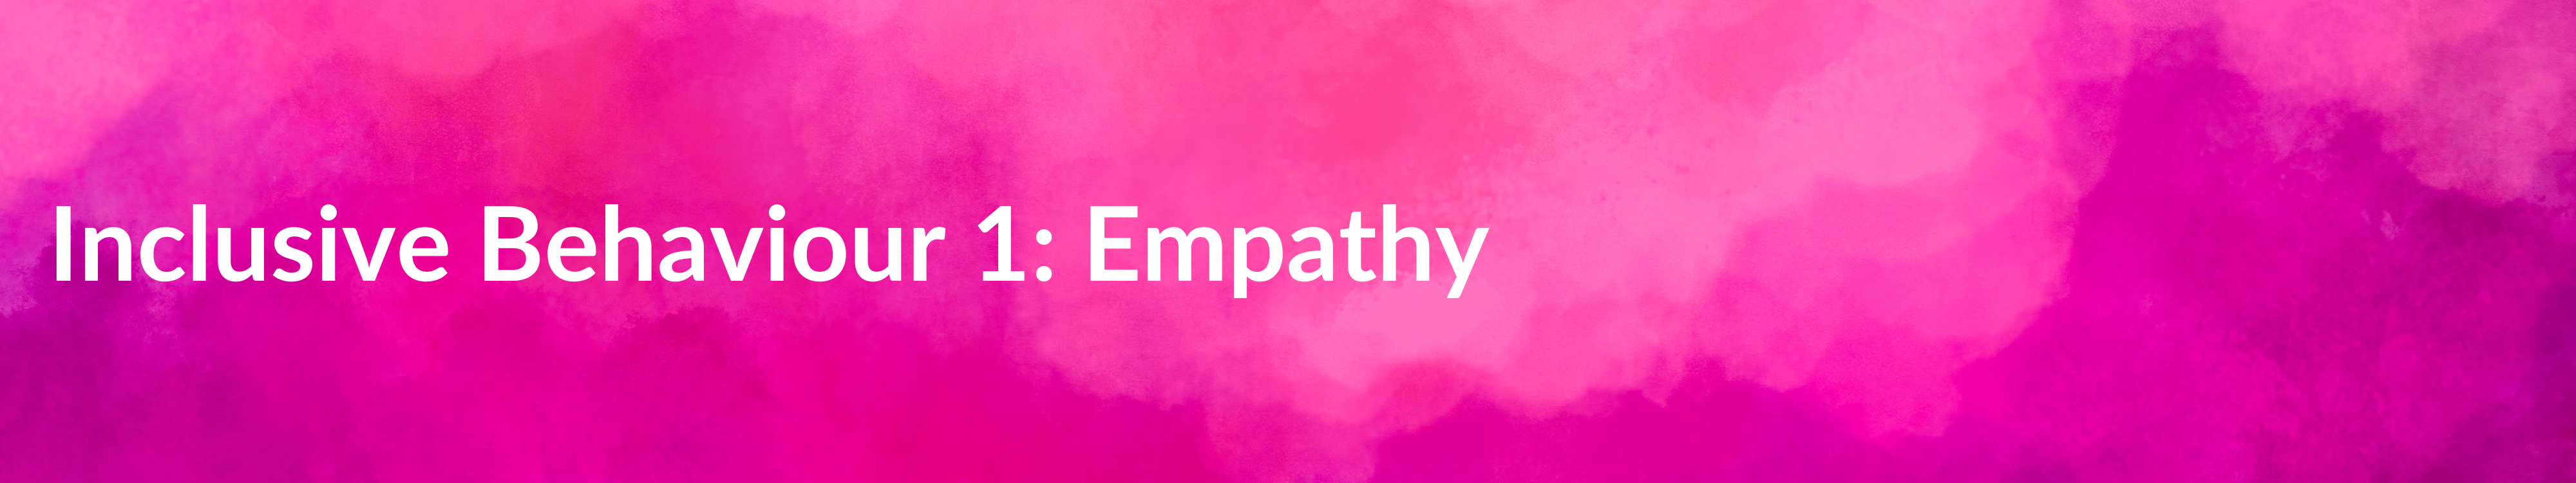 Inclusive Behaviour 1 Empathy